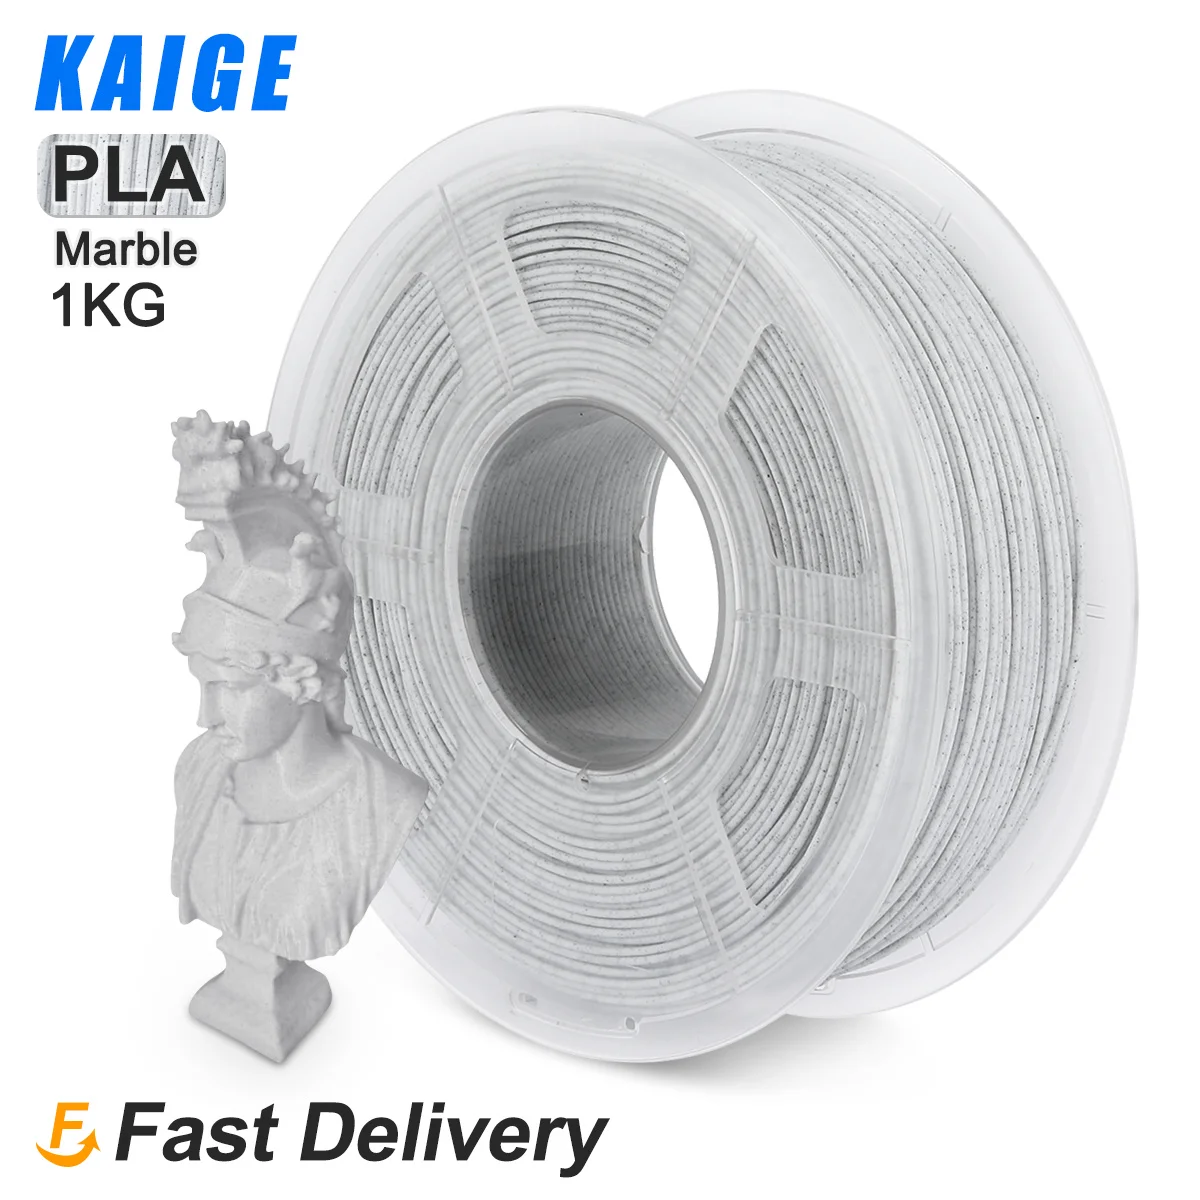 

KAIGE PLA MARBLE 3D Printer Sublimation Filament 1.75mm 1kg Close To Marble Effect Printing Materials 3D FDM Printer Consumables